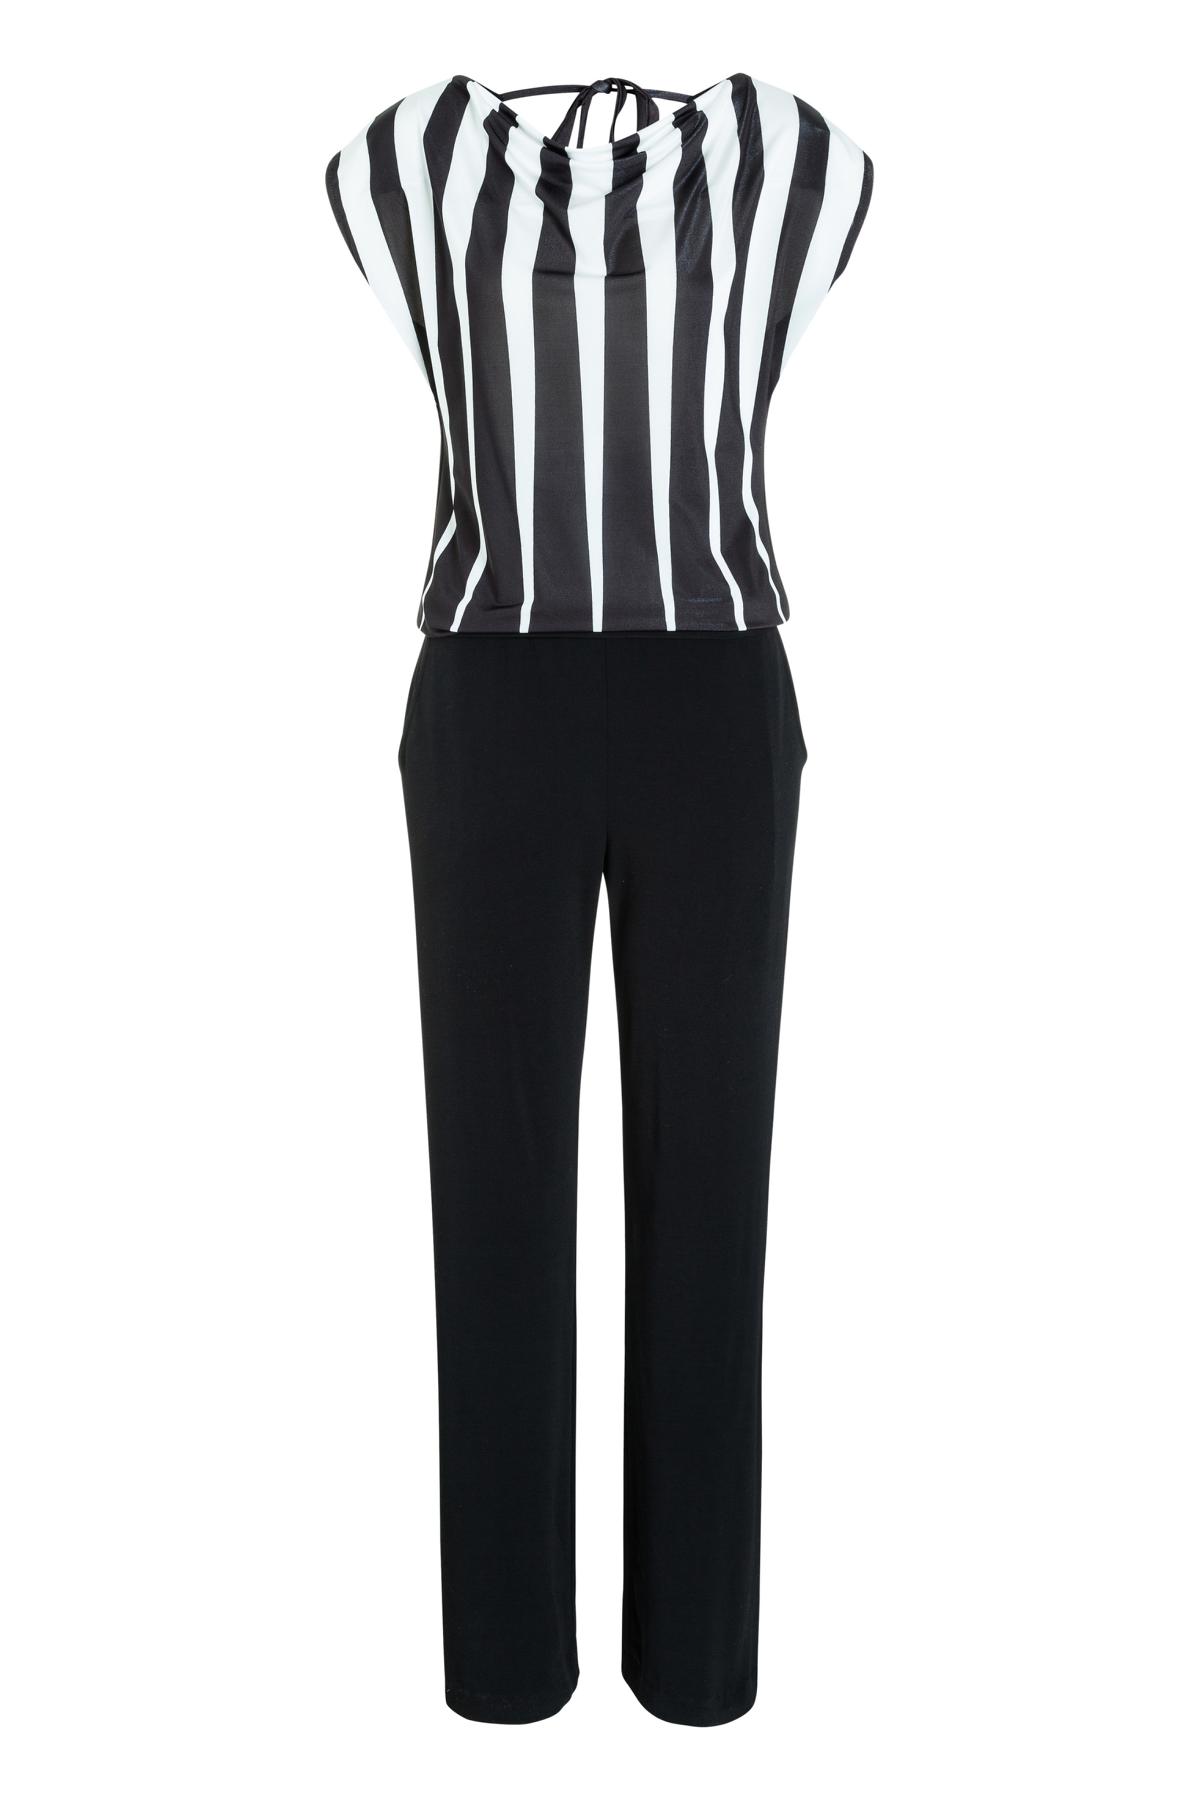 Black White Striped Jumpsuit Mariseri Ana Alcazar